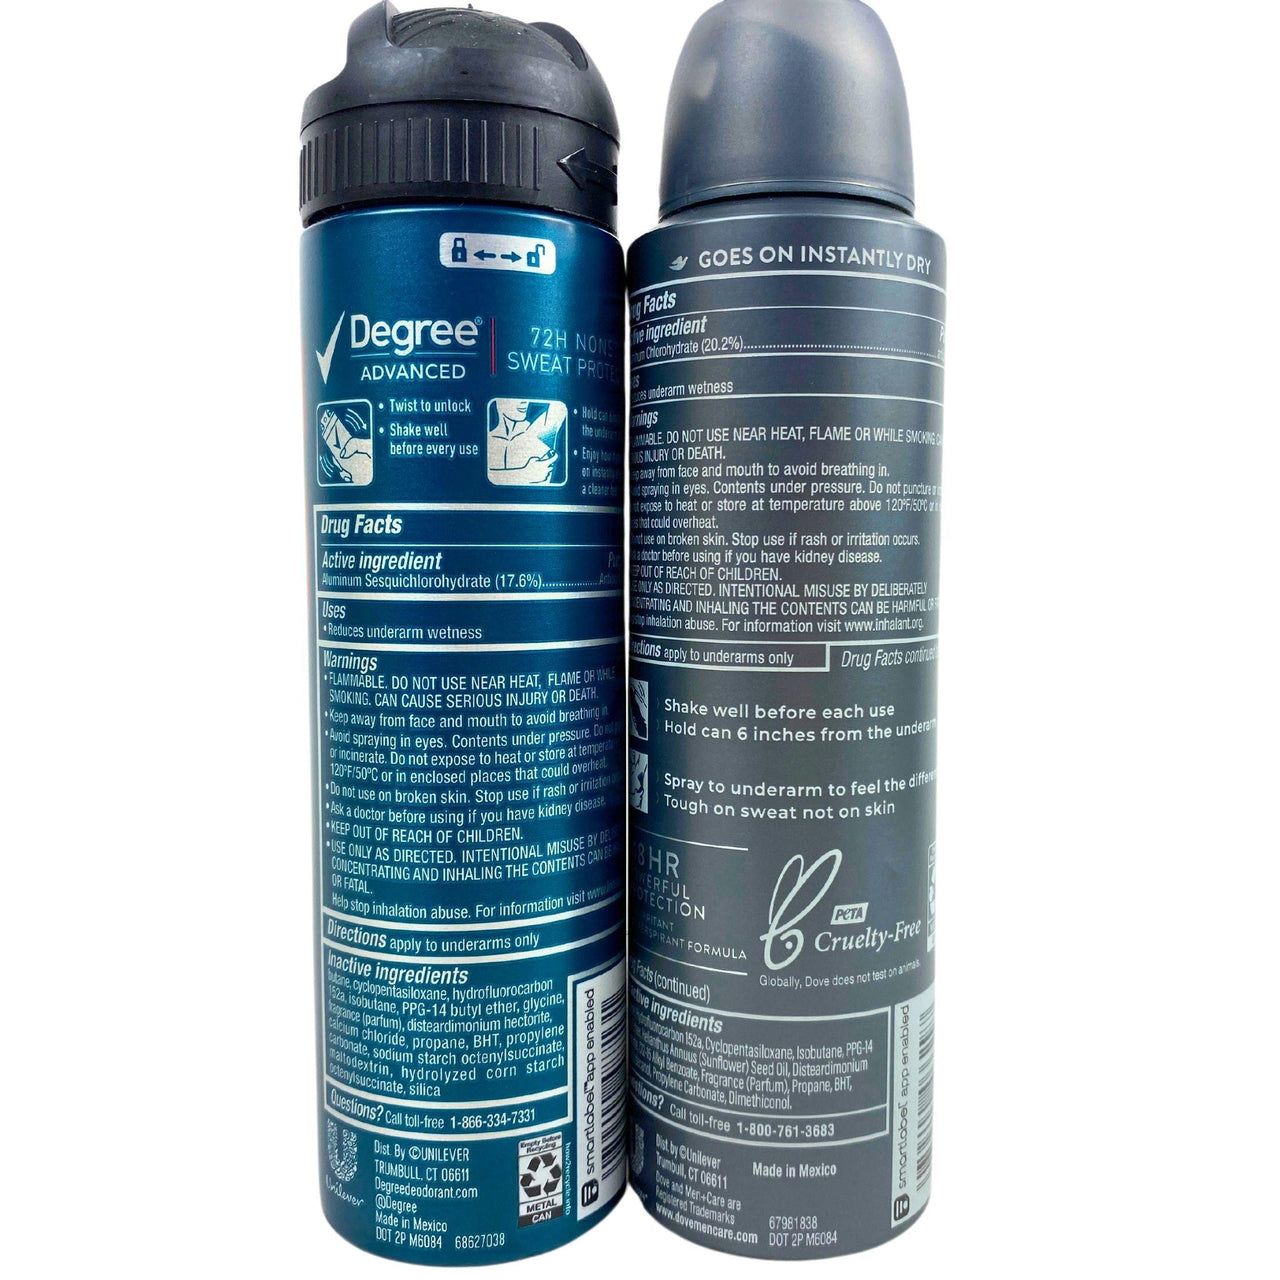 Assorted Men Deodorant Degree Advanced 72H MotionSense Dry Spray 3.8OZ and Dove Men+Care 3.8OZ (50 Pcs Lot) - Discount Wholesalers Inc